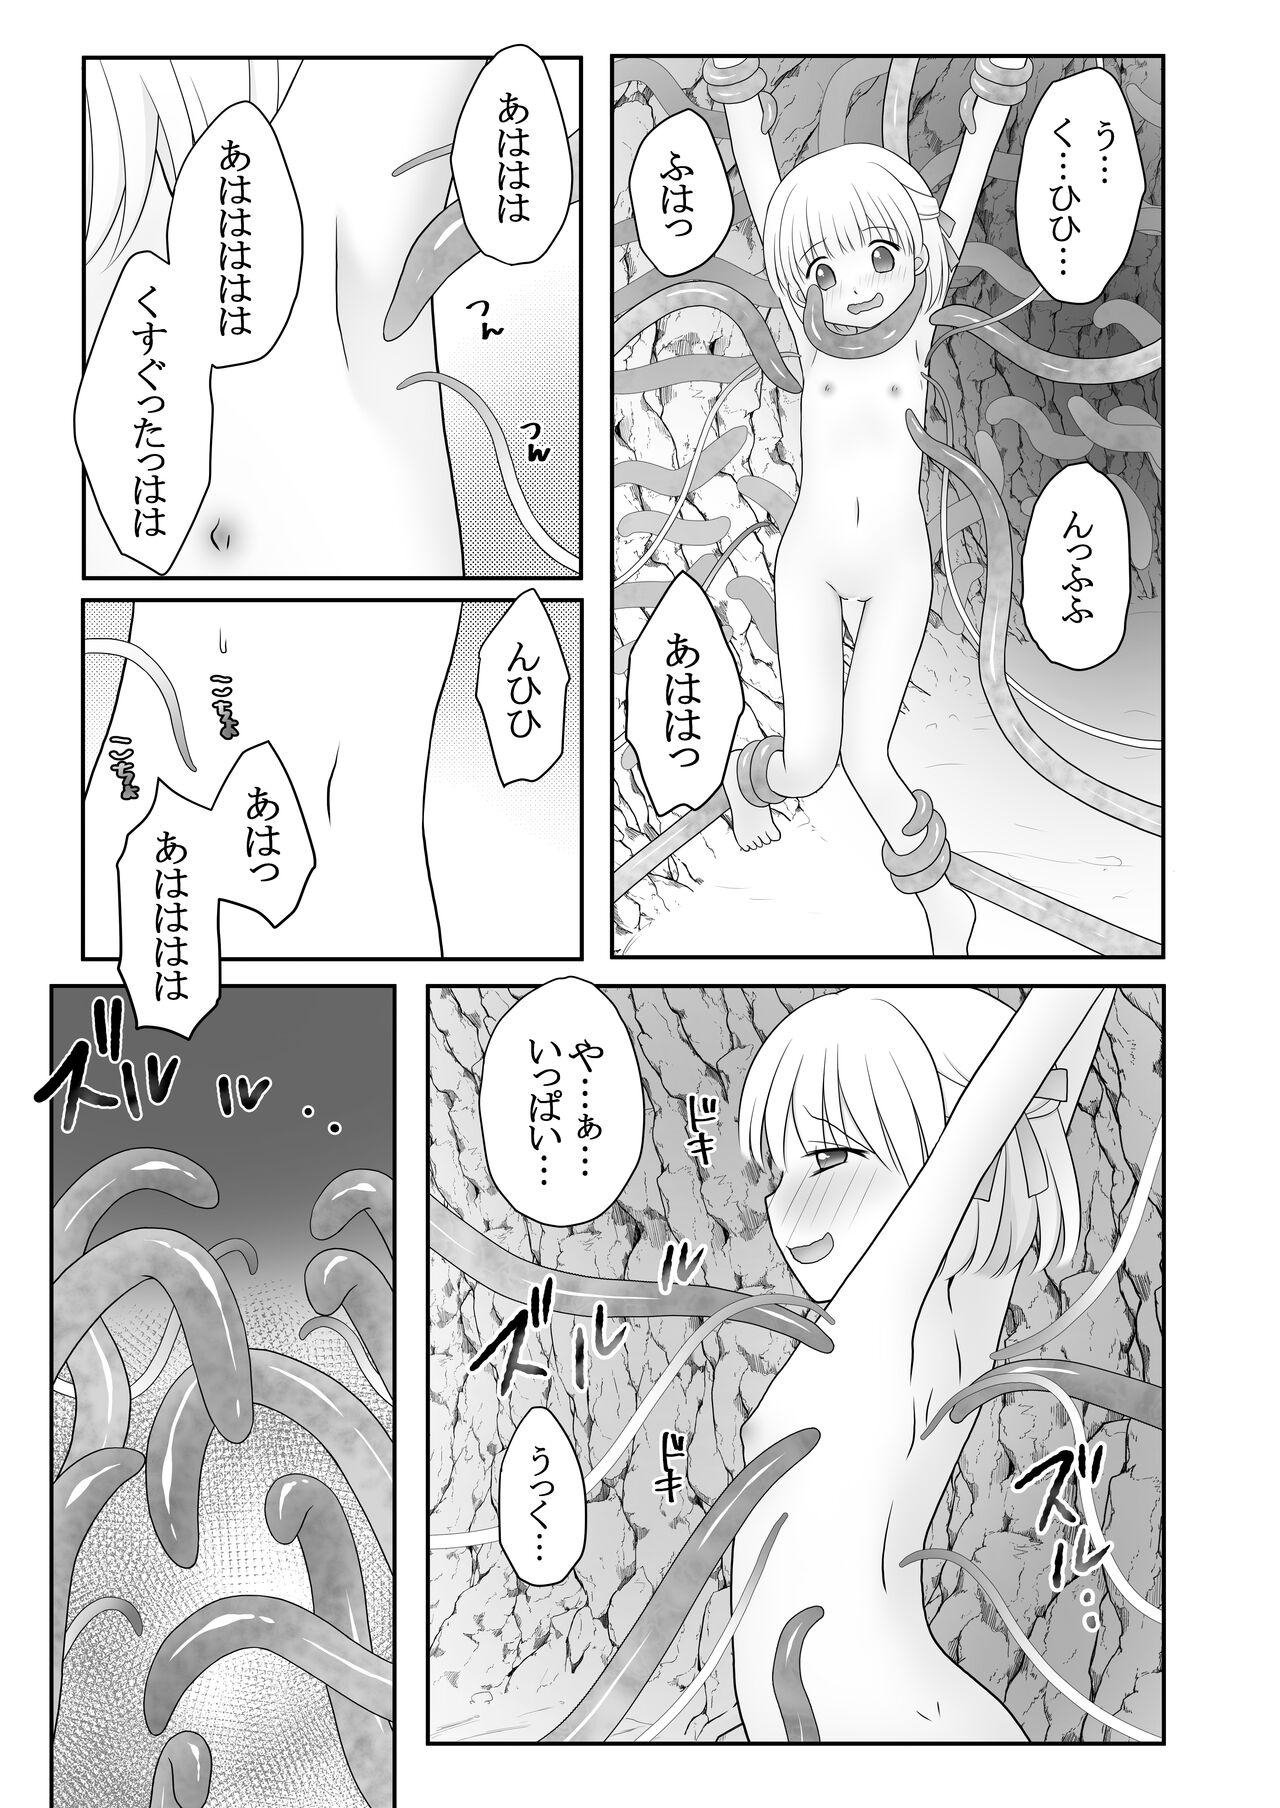 Red Head Maigo no Mori no Kusuguribana 4 - Original Camporn - Page 8